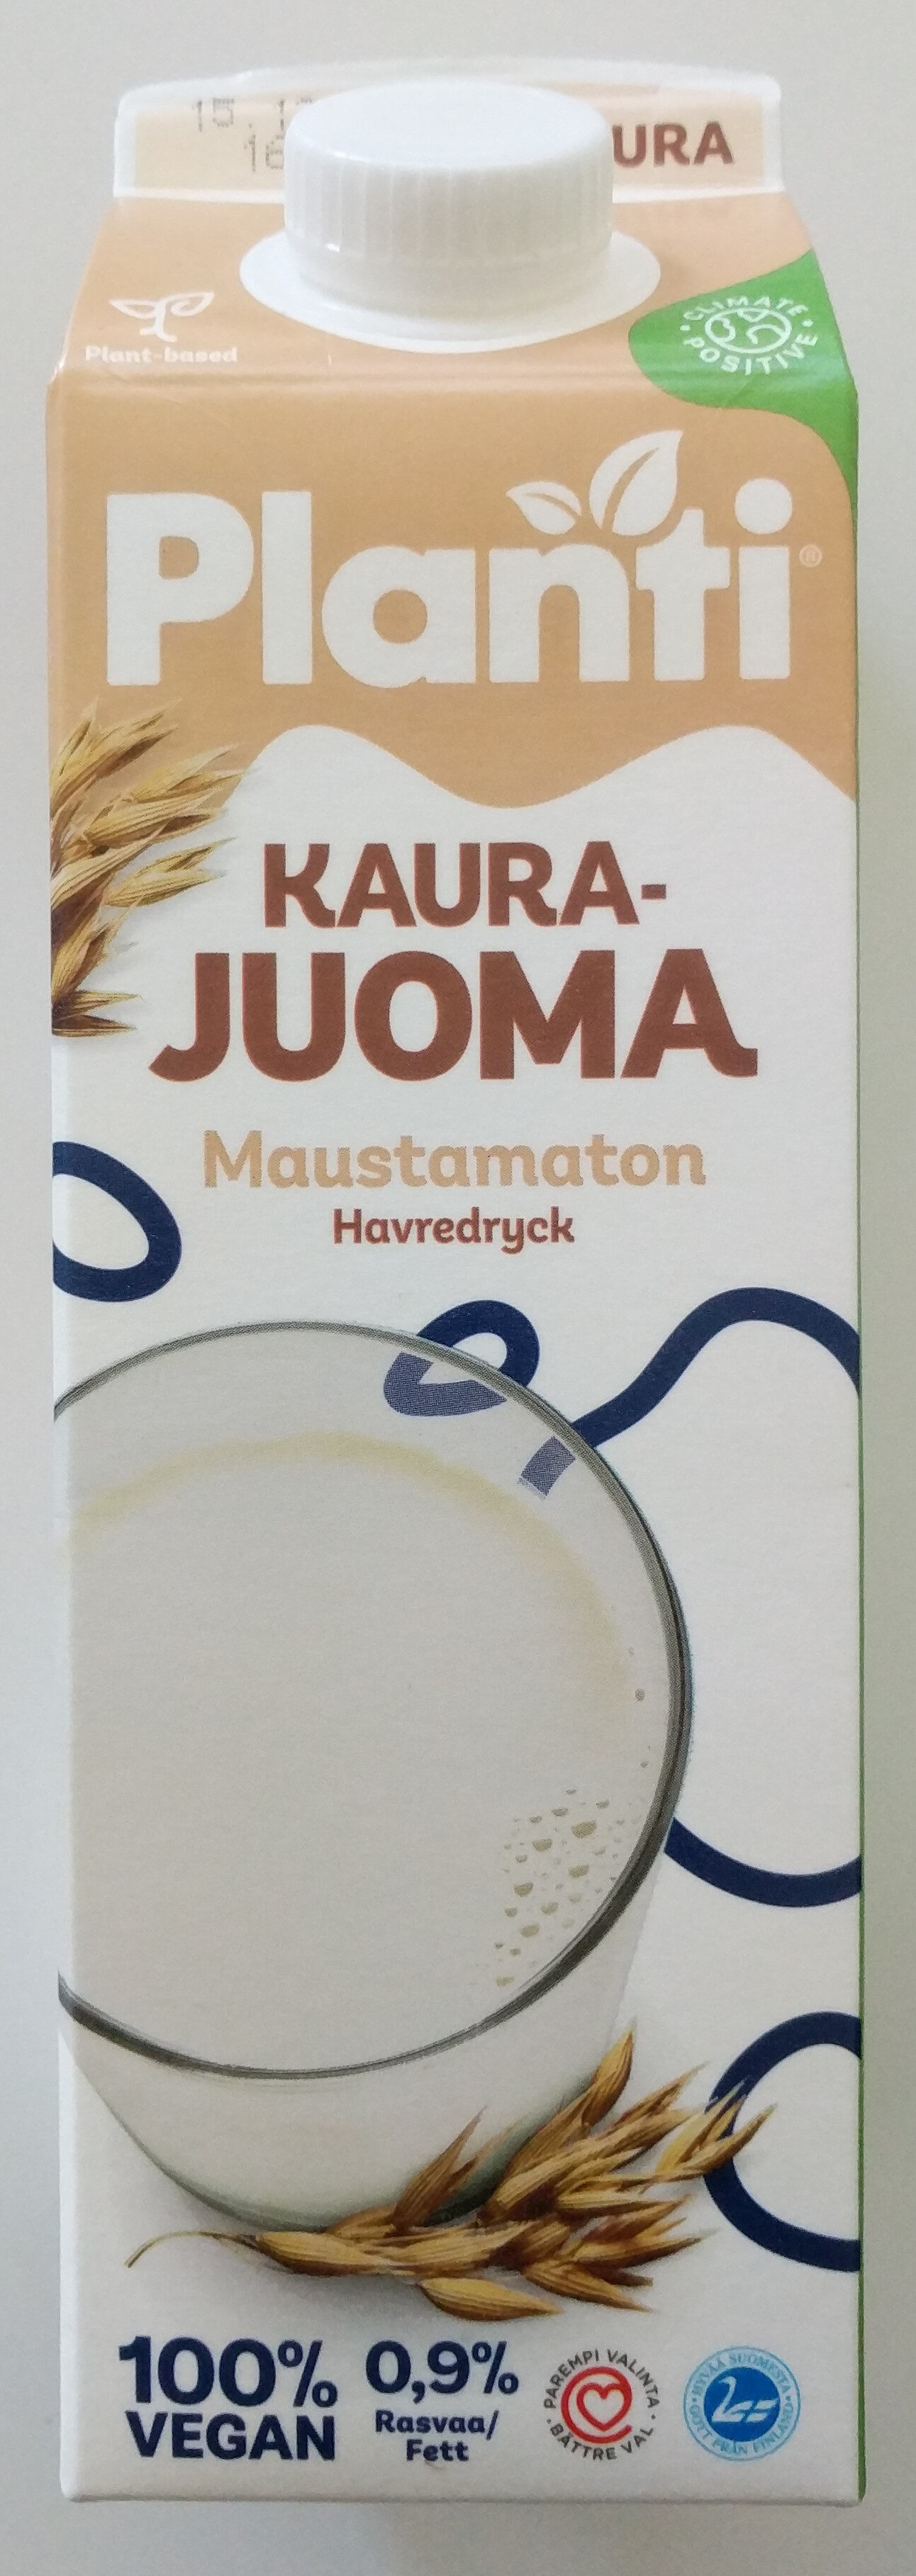 Kaurajuoma Maustamaton - نتاج - fi